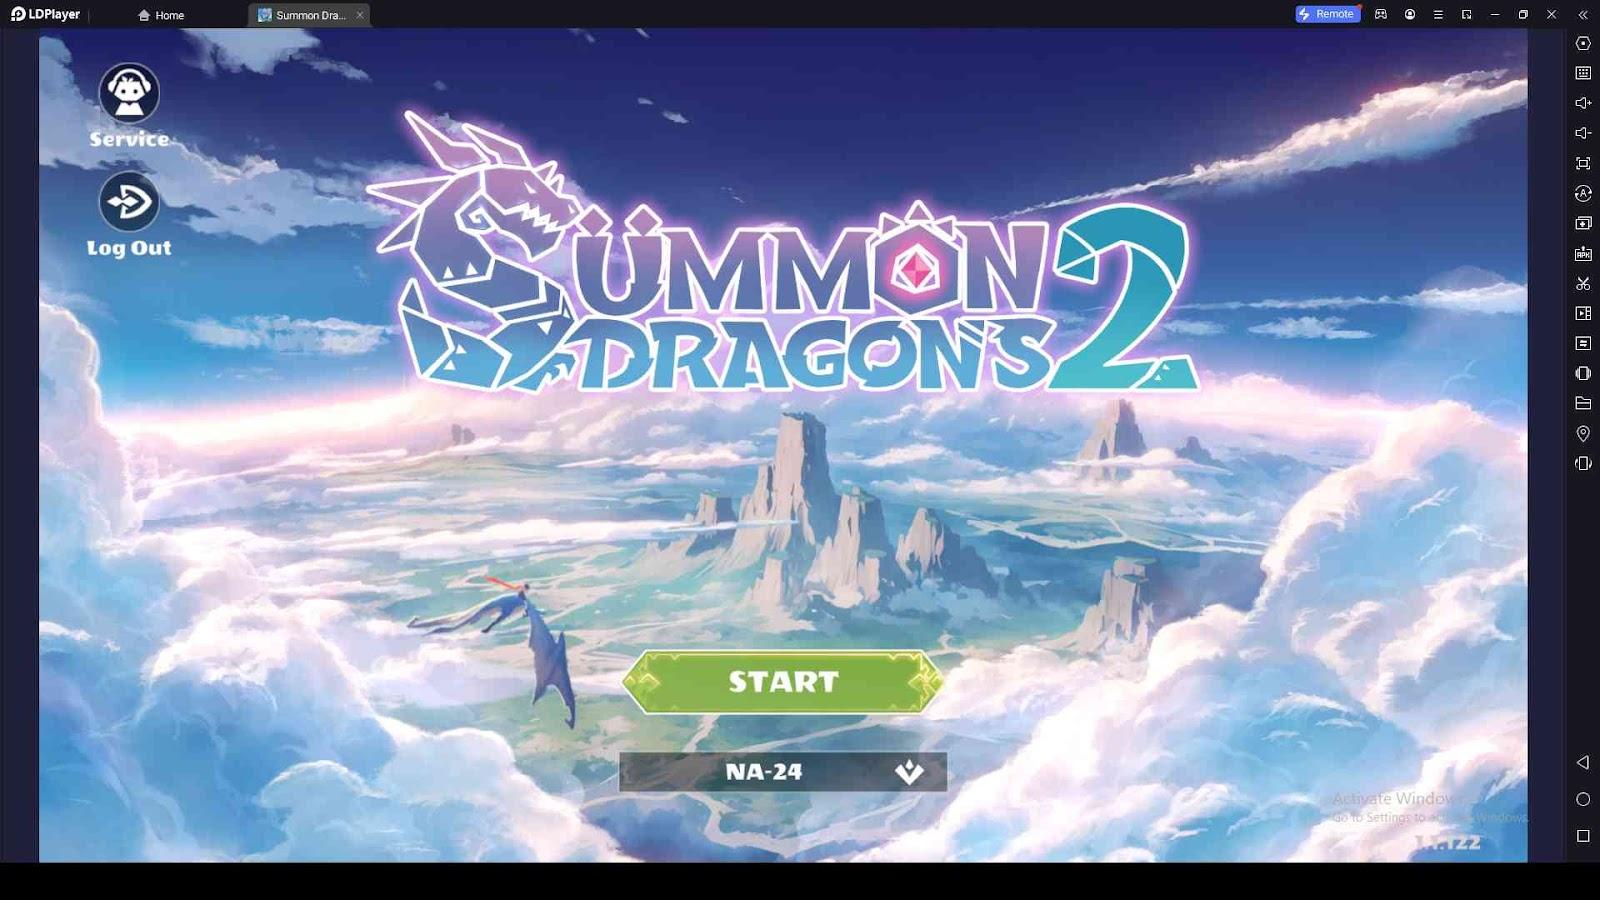  Summon Dragons 2 codes 